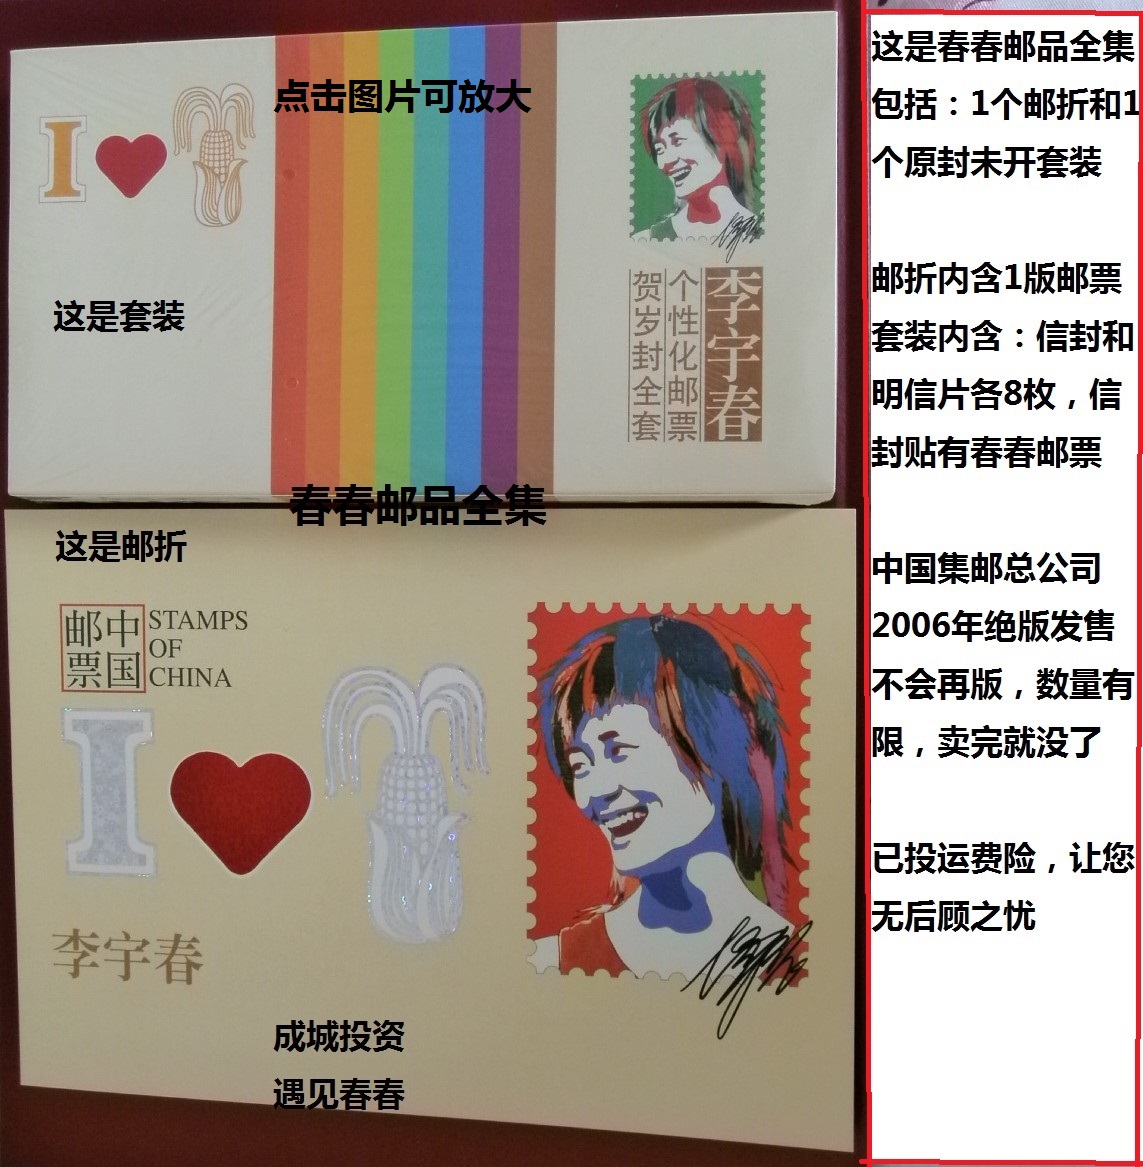 Li Yuchun 切手の完全なコレクション (セットと切手折り込みを含む) を囲む誕生日プレゼント